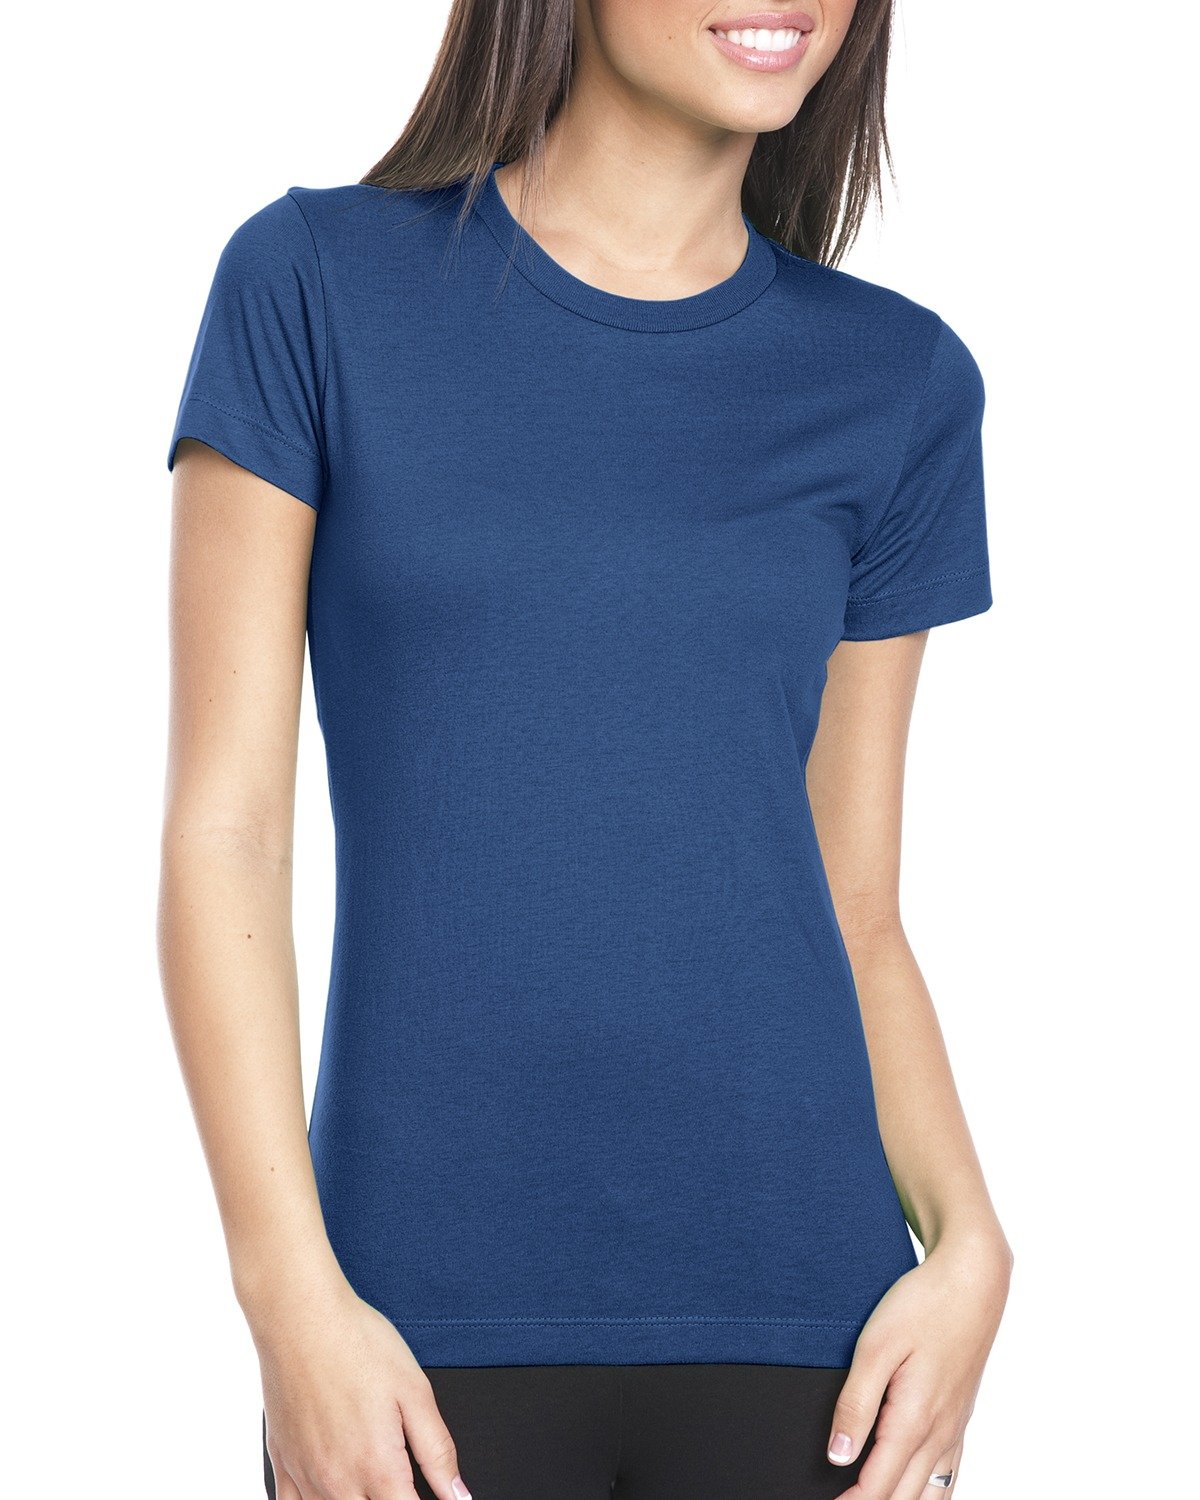 Next Level Apparel Ladies' Boyfriend T-Shirt COOL BLUE 